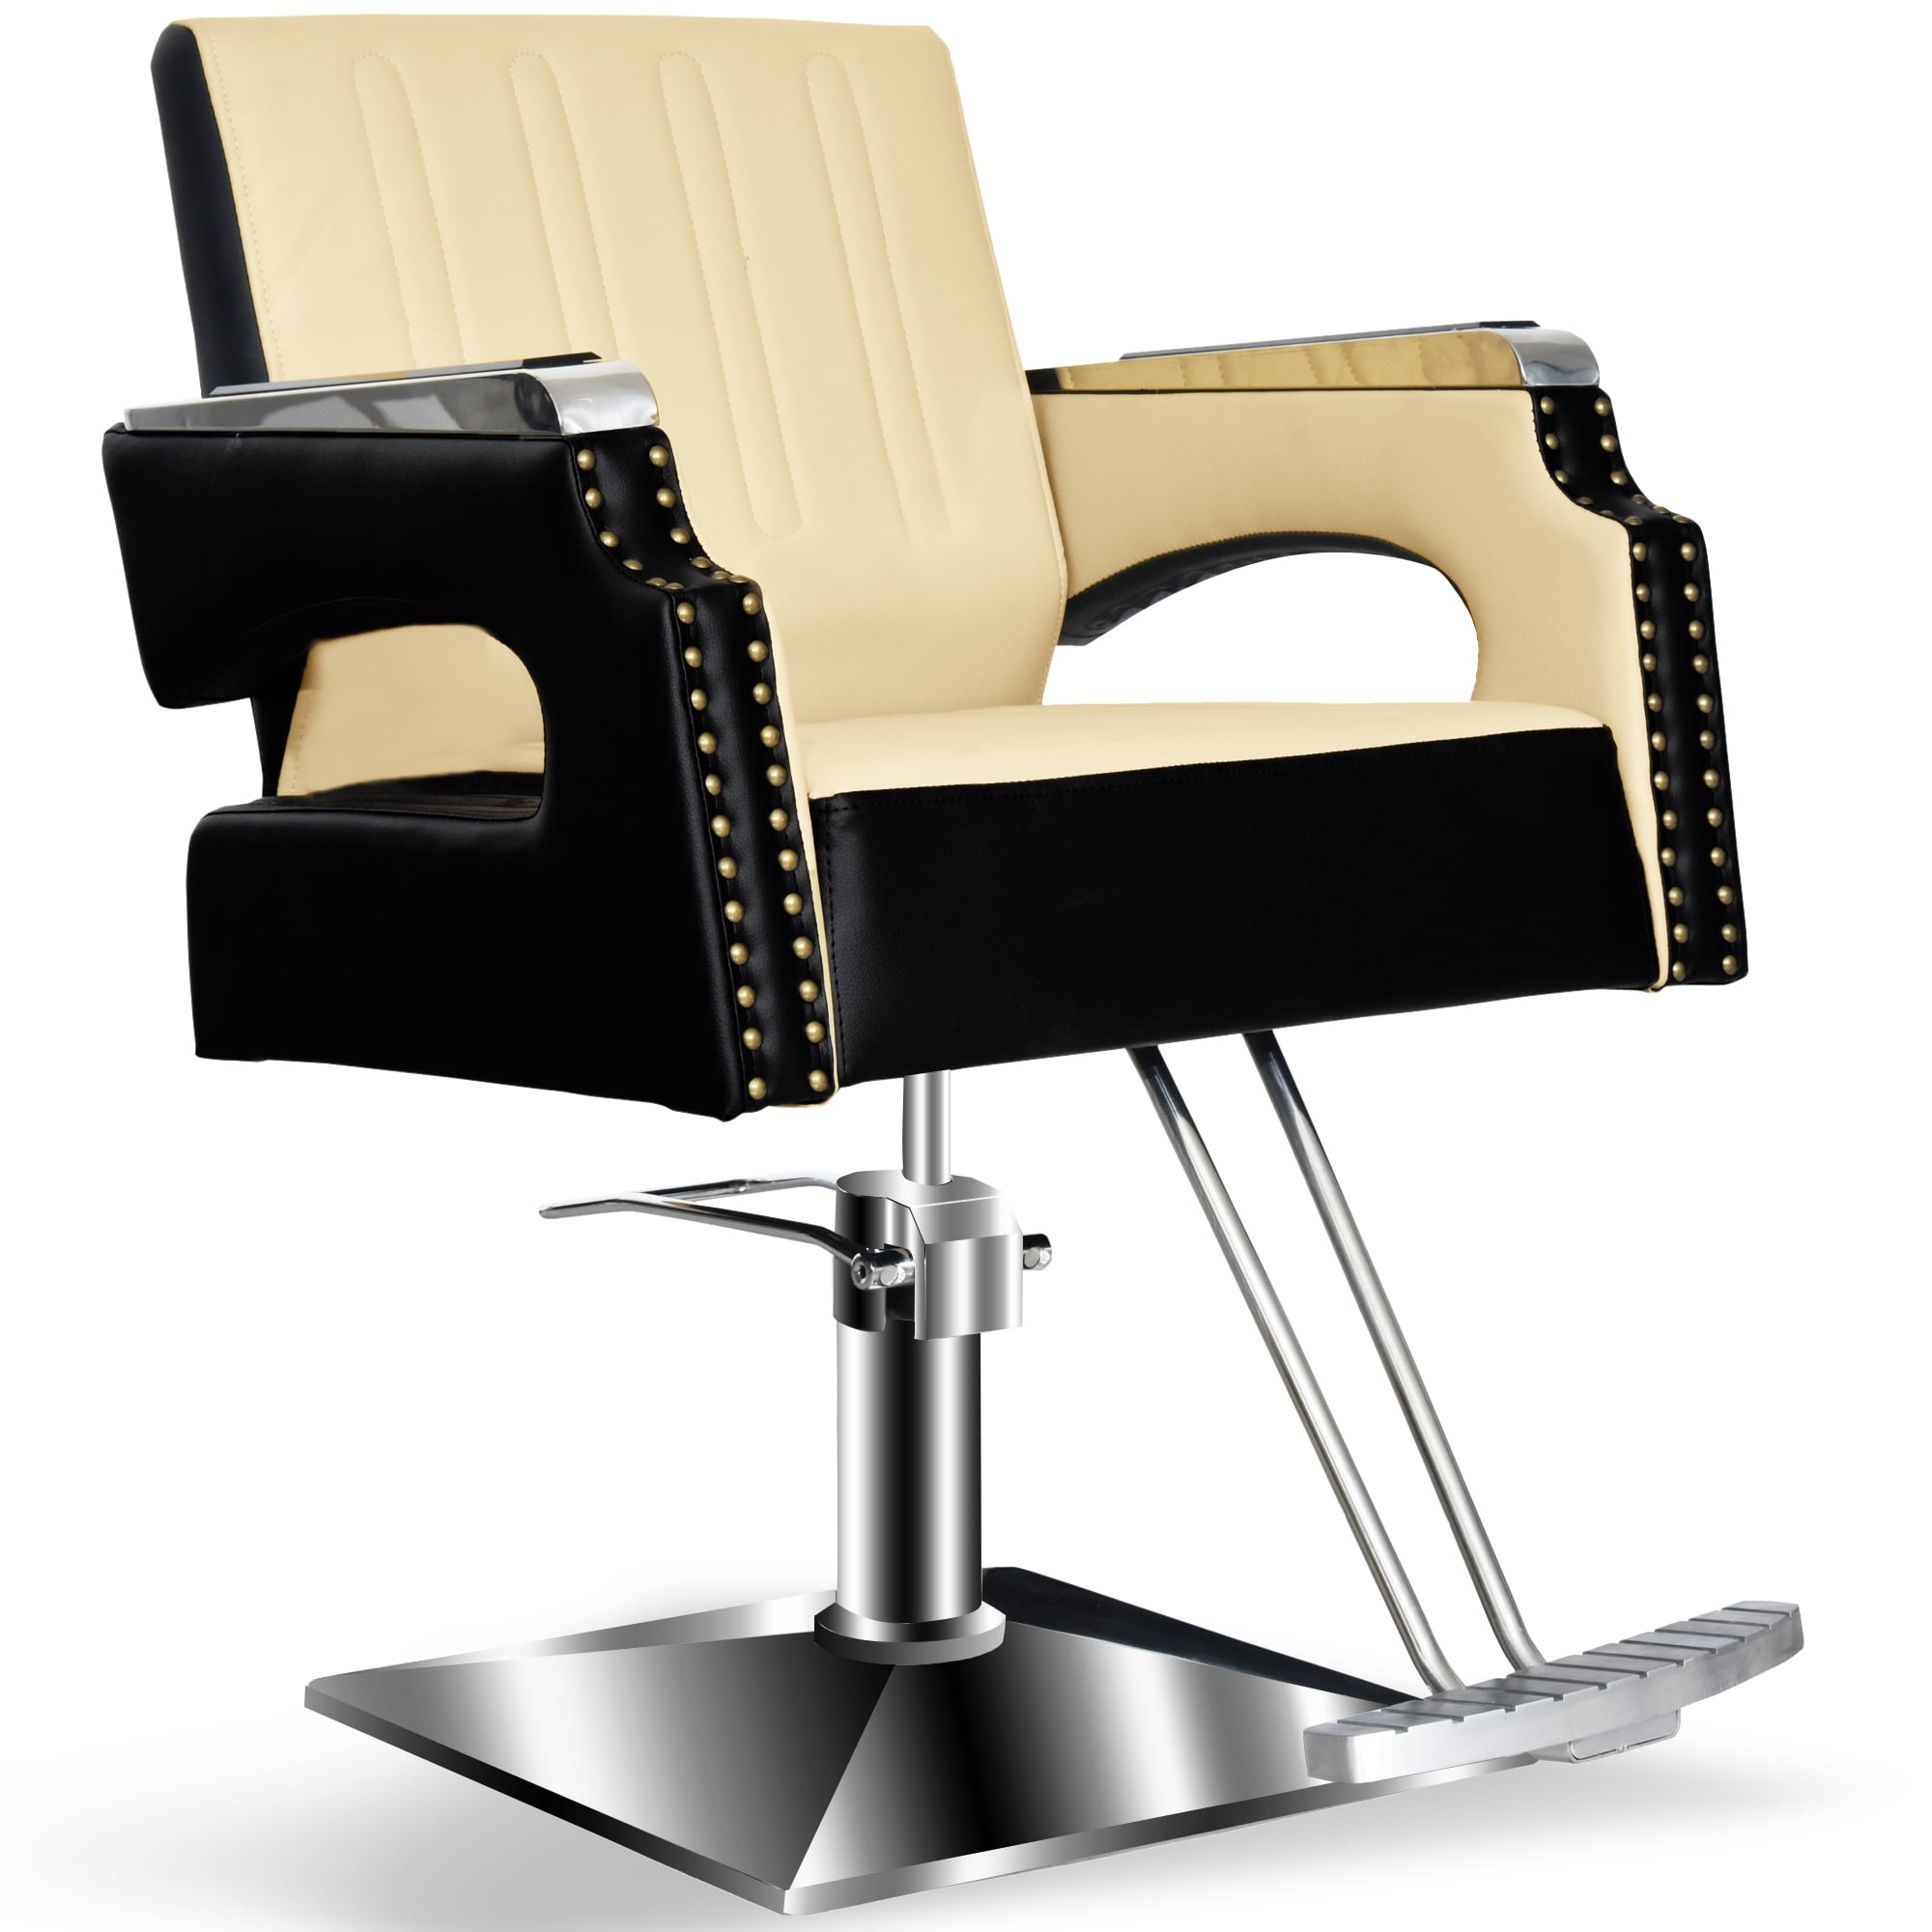 Barberpub Salon Chair For Hair Stylist All Purpose Classic Hydraulic Barber Styling Chair